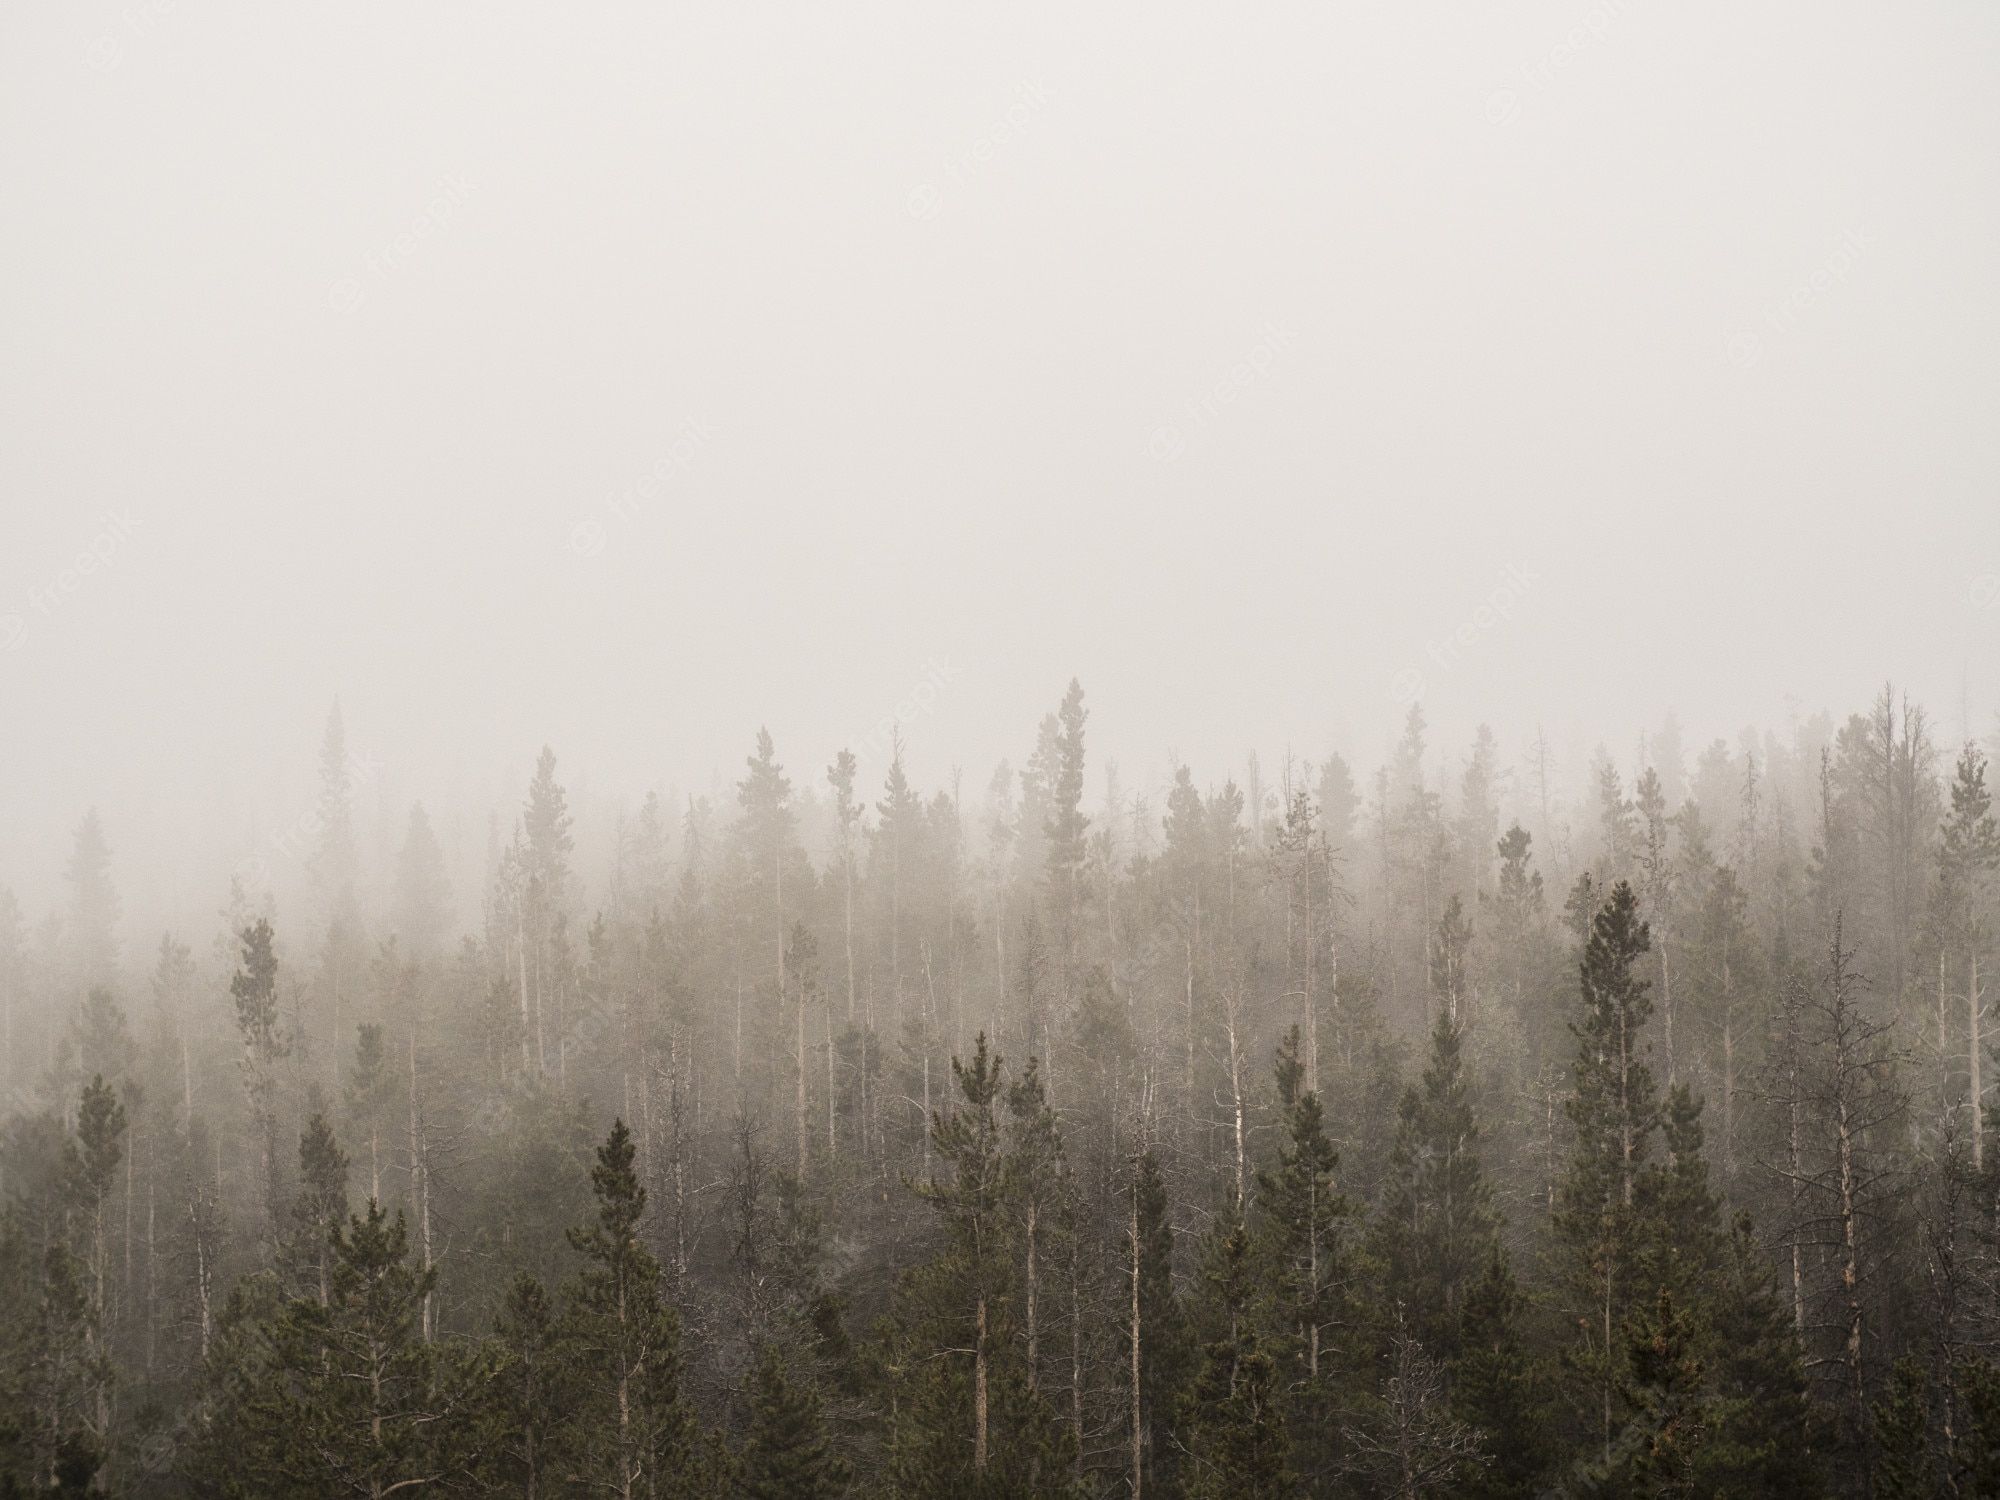 A forest of trees shrouded in fog - Fog